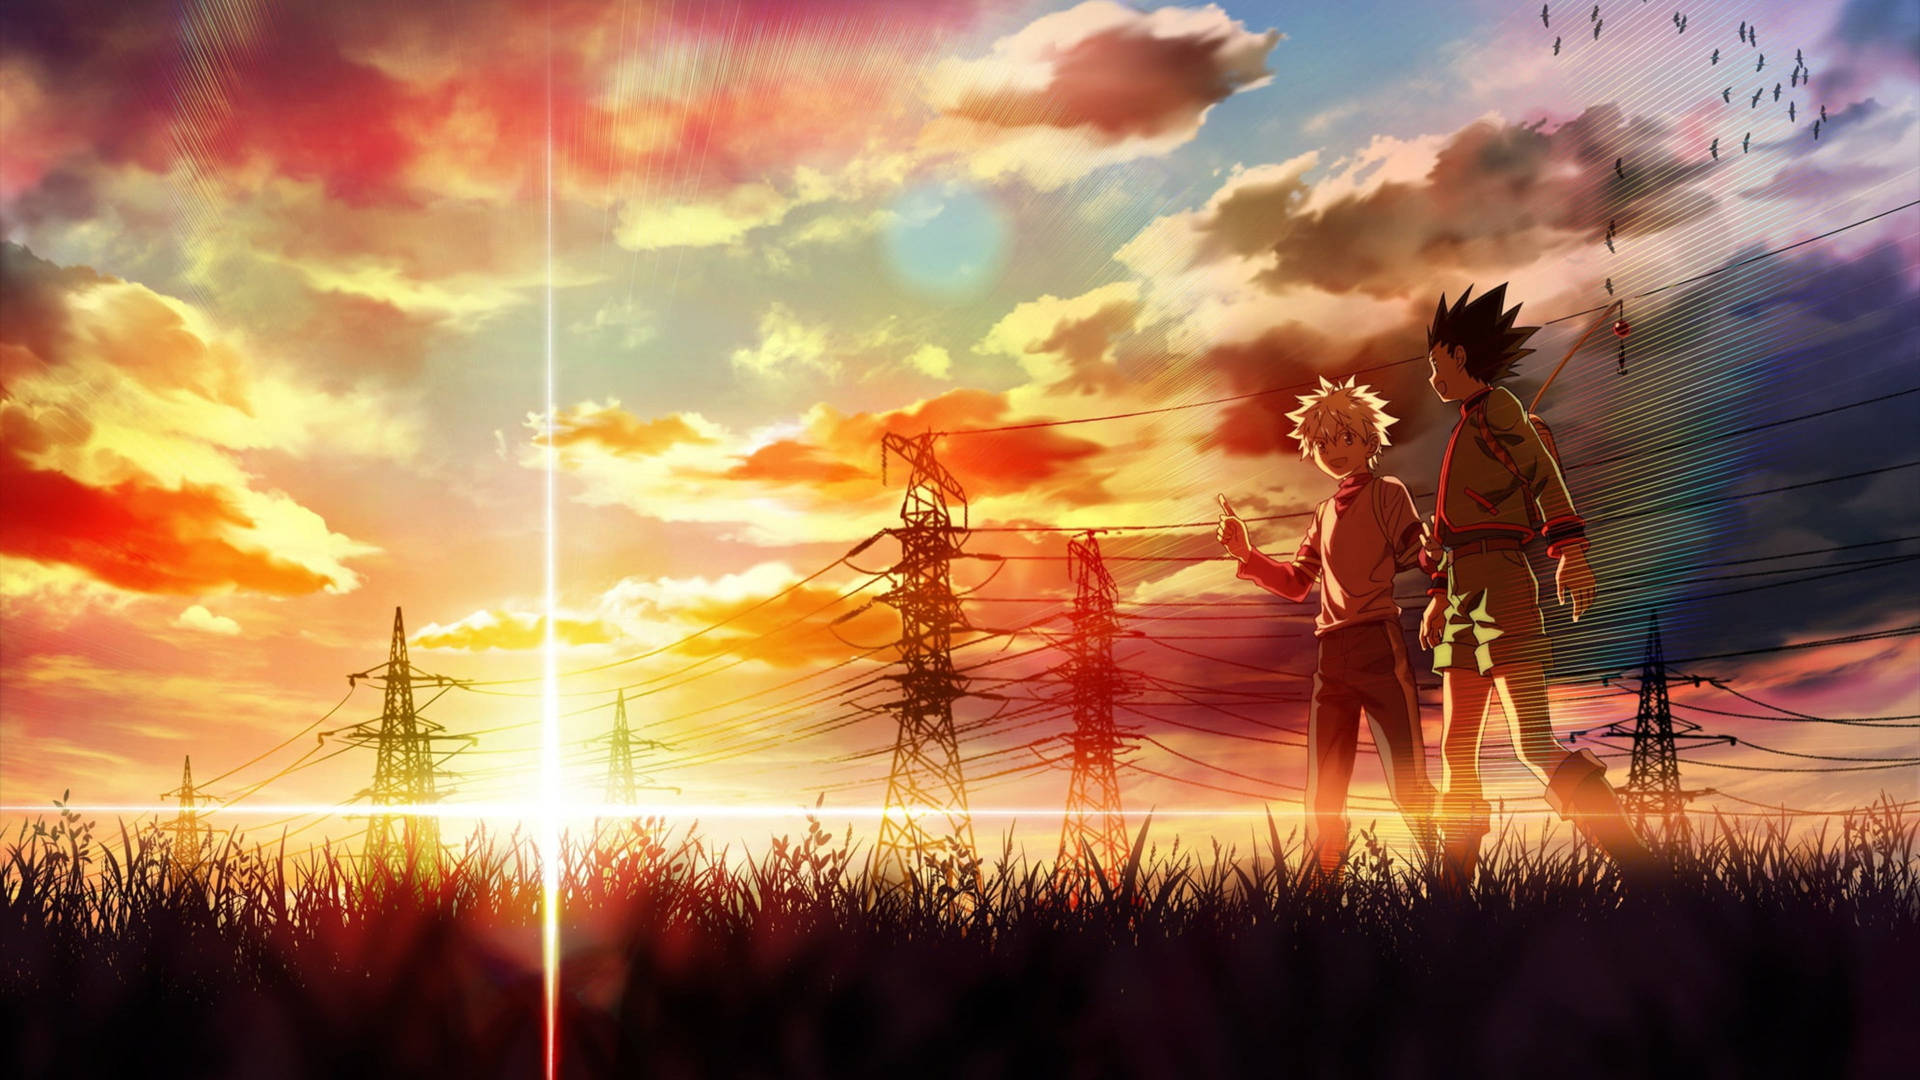 Gon And Killua At Sunset Wallpaper